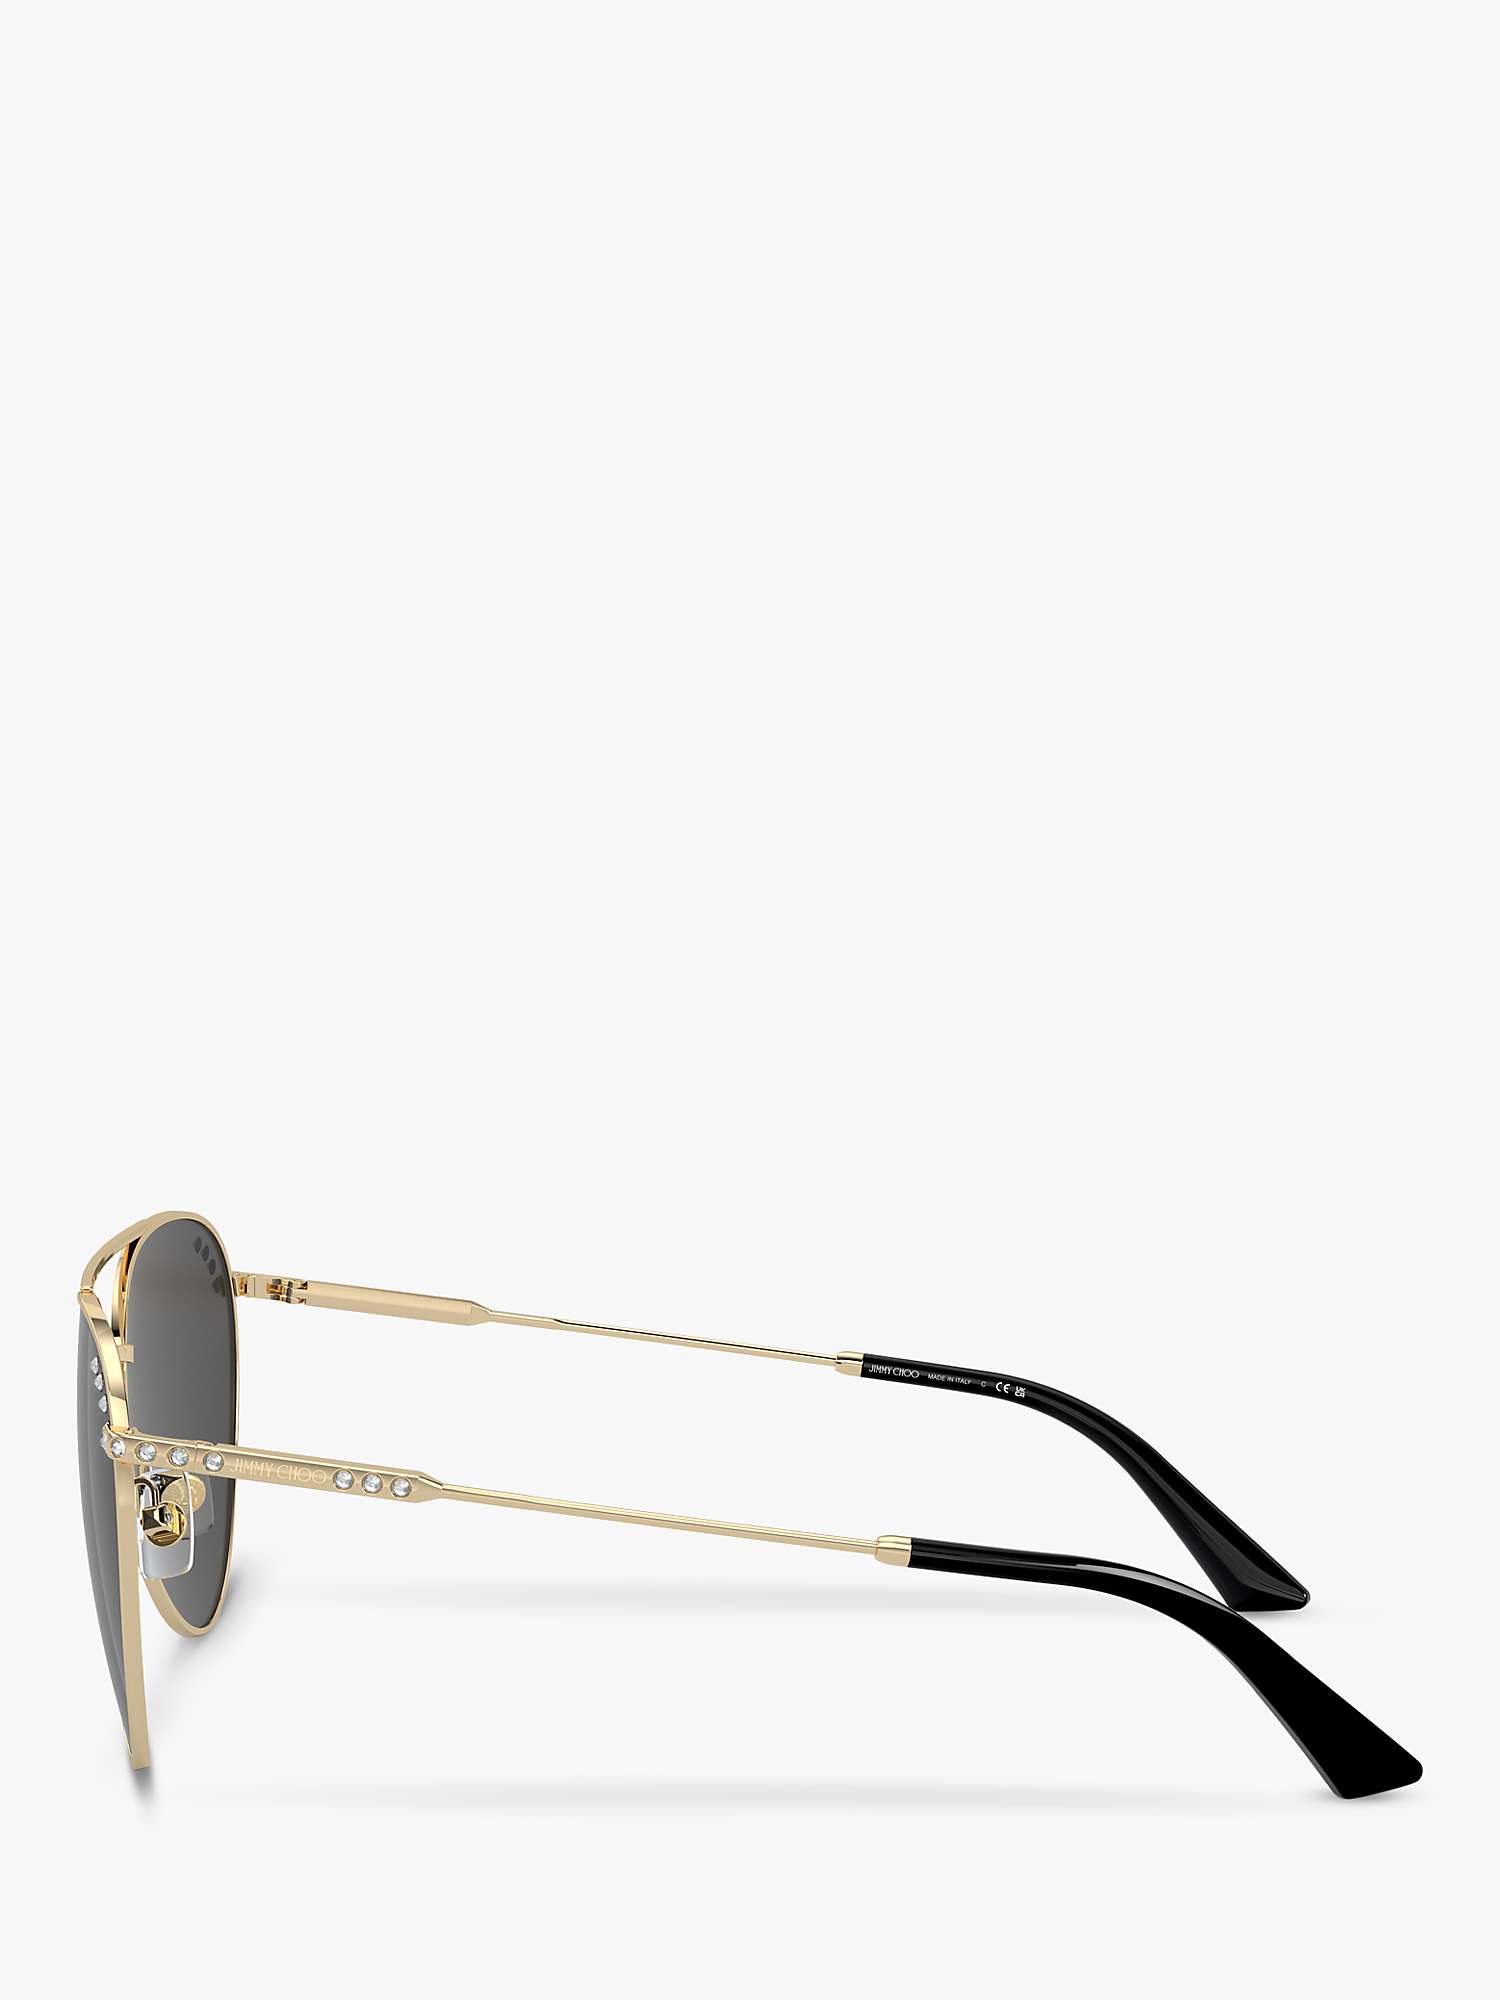 Buy Jimmy Choo JC4002B Women's Aviator Sunglasses, Pale Gold/Grey Online at johnlewis.com